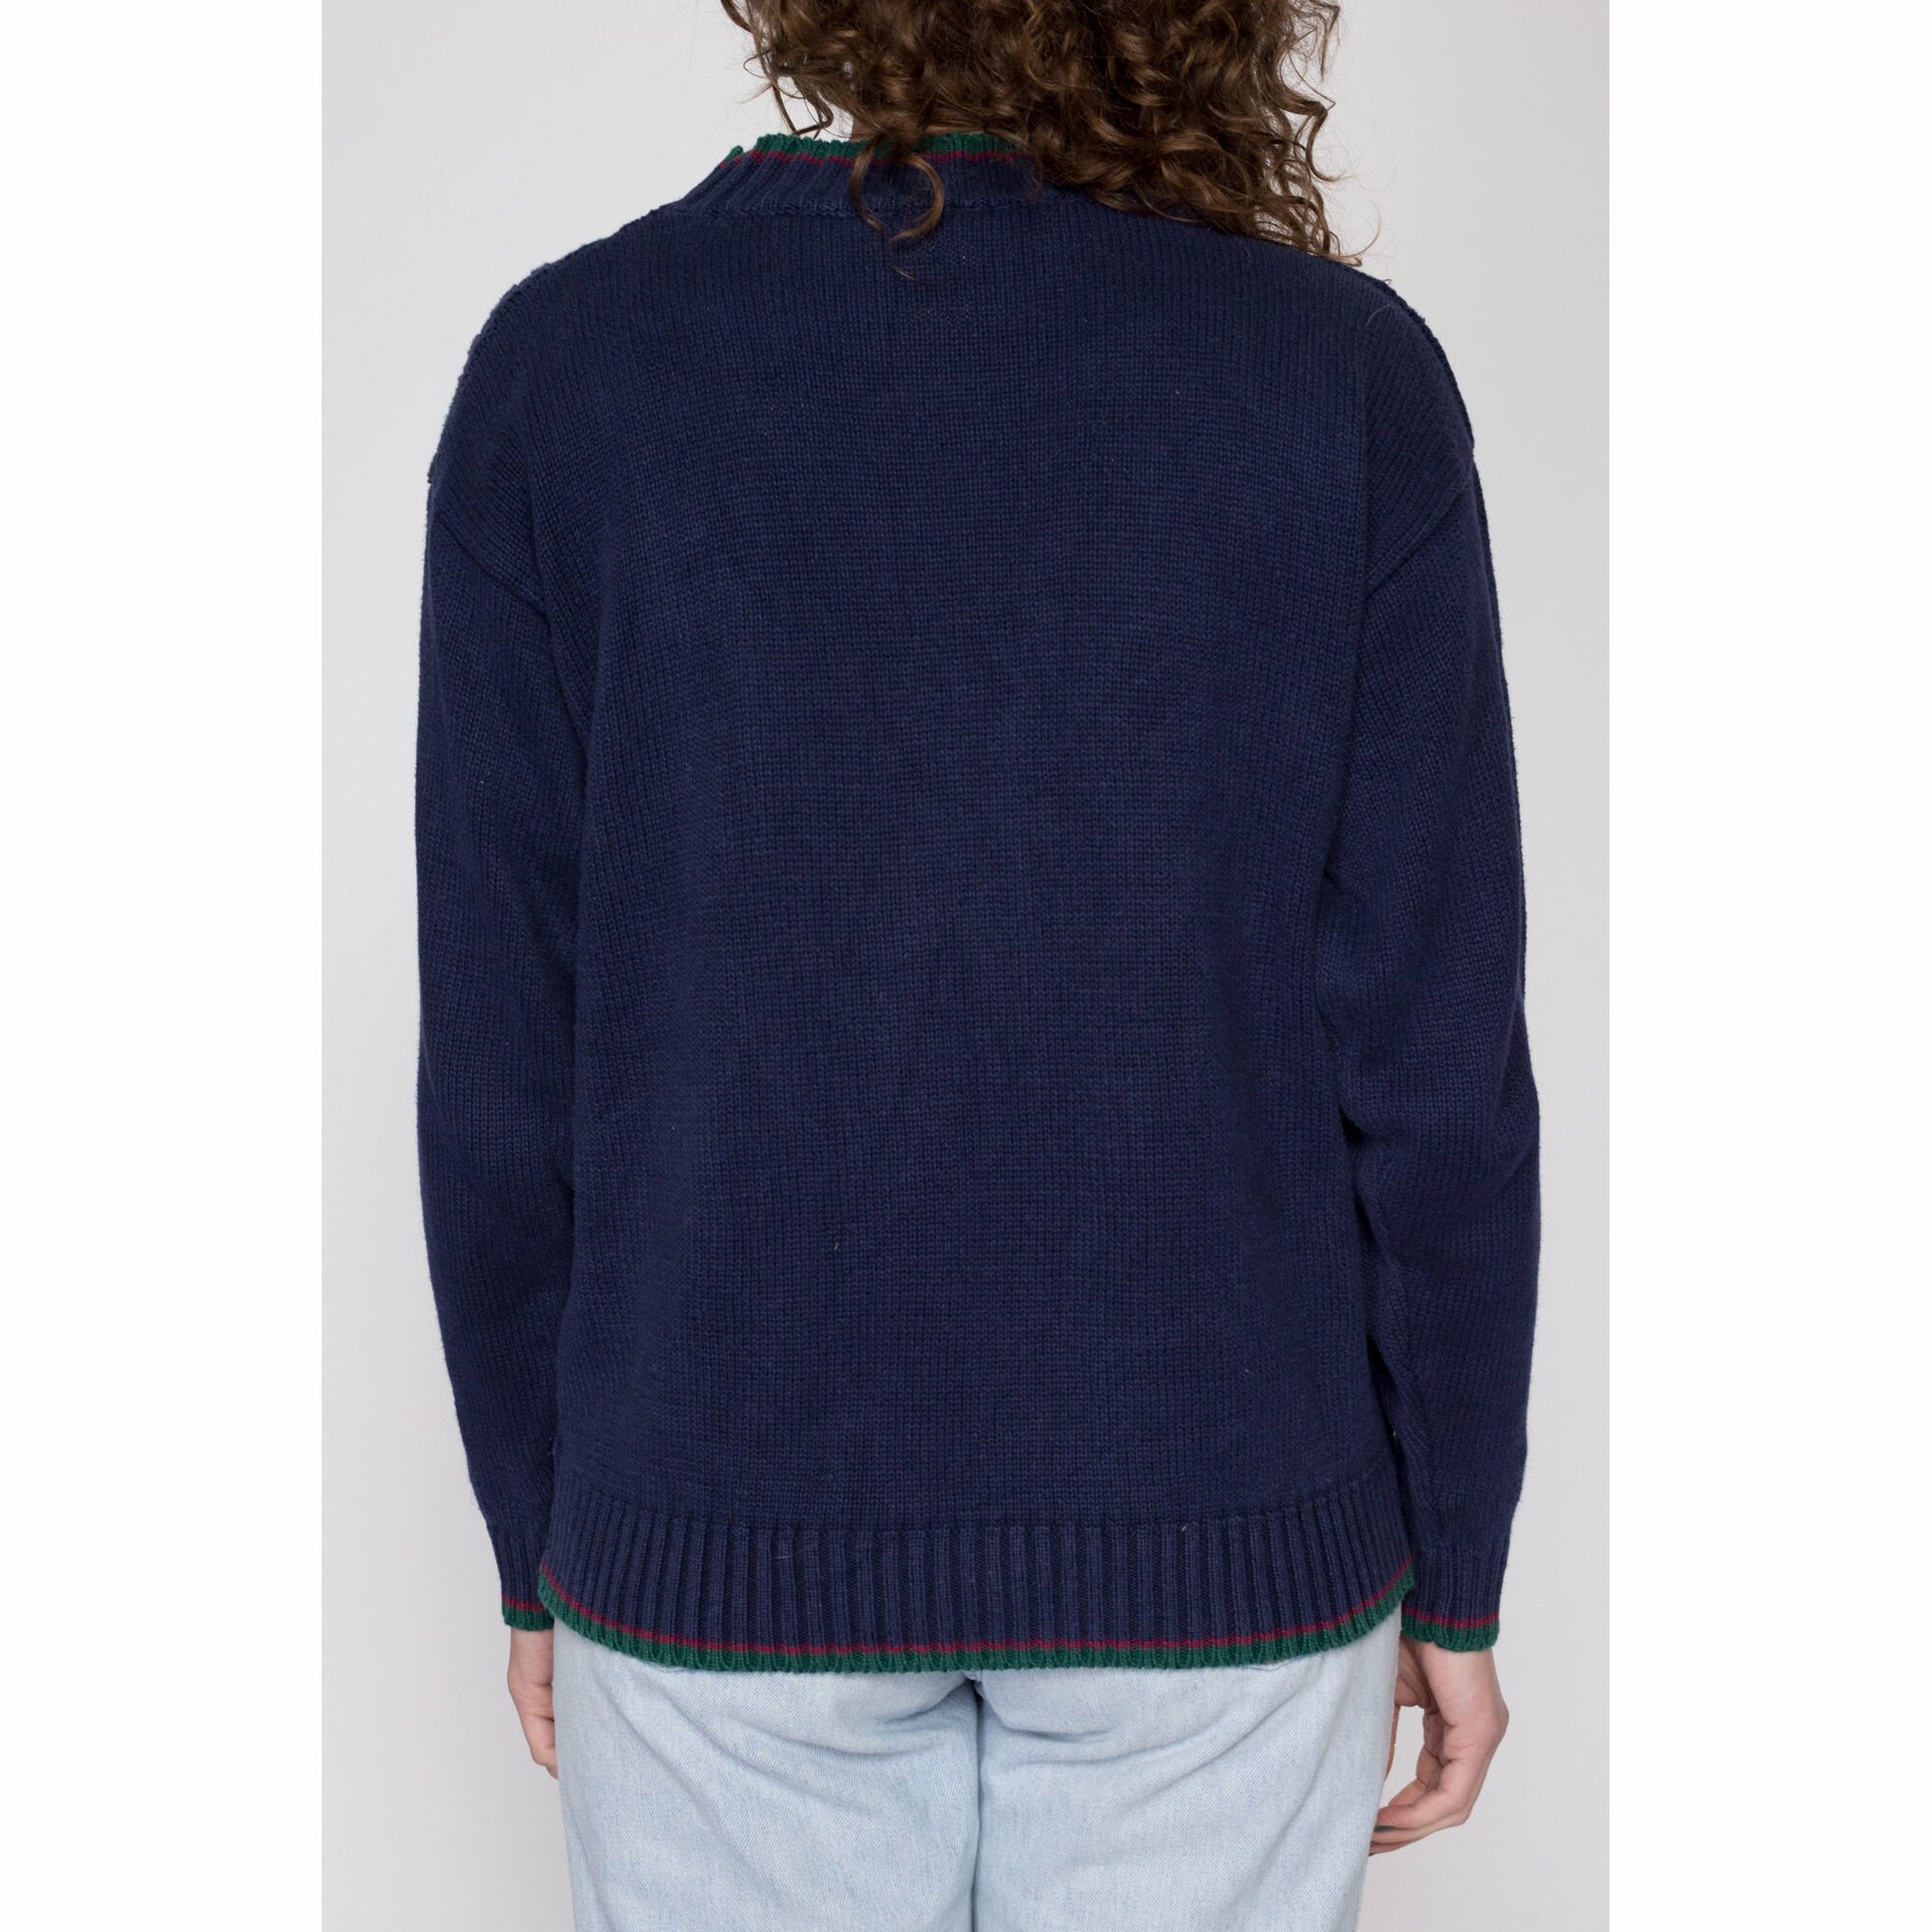 Medium 80s Jantzen Navy Blue Argyle Cable Knit Sweater | Vintage Slouchy Ramie Cotton Pullover Jumper